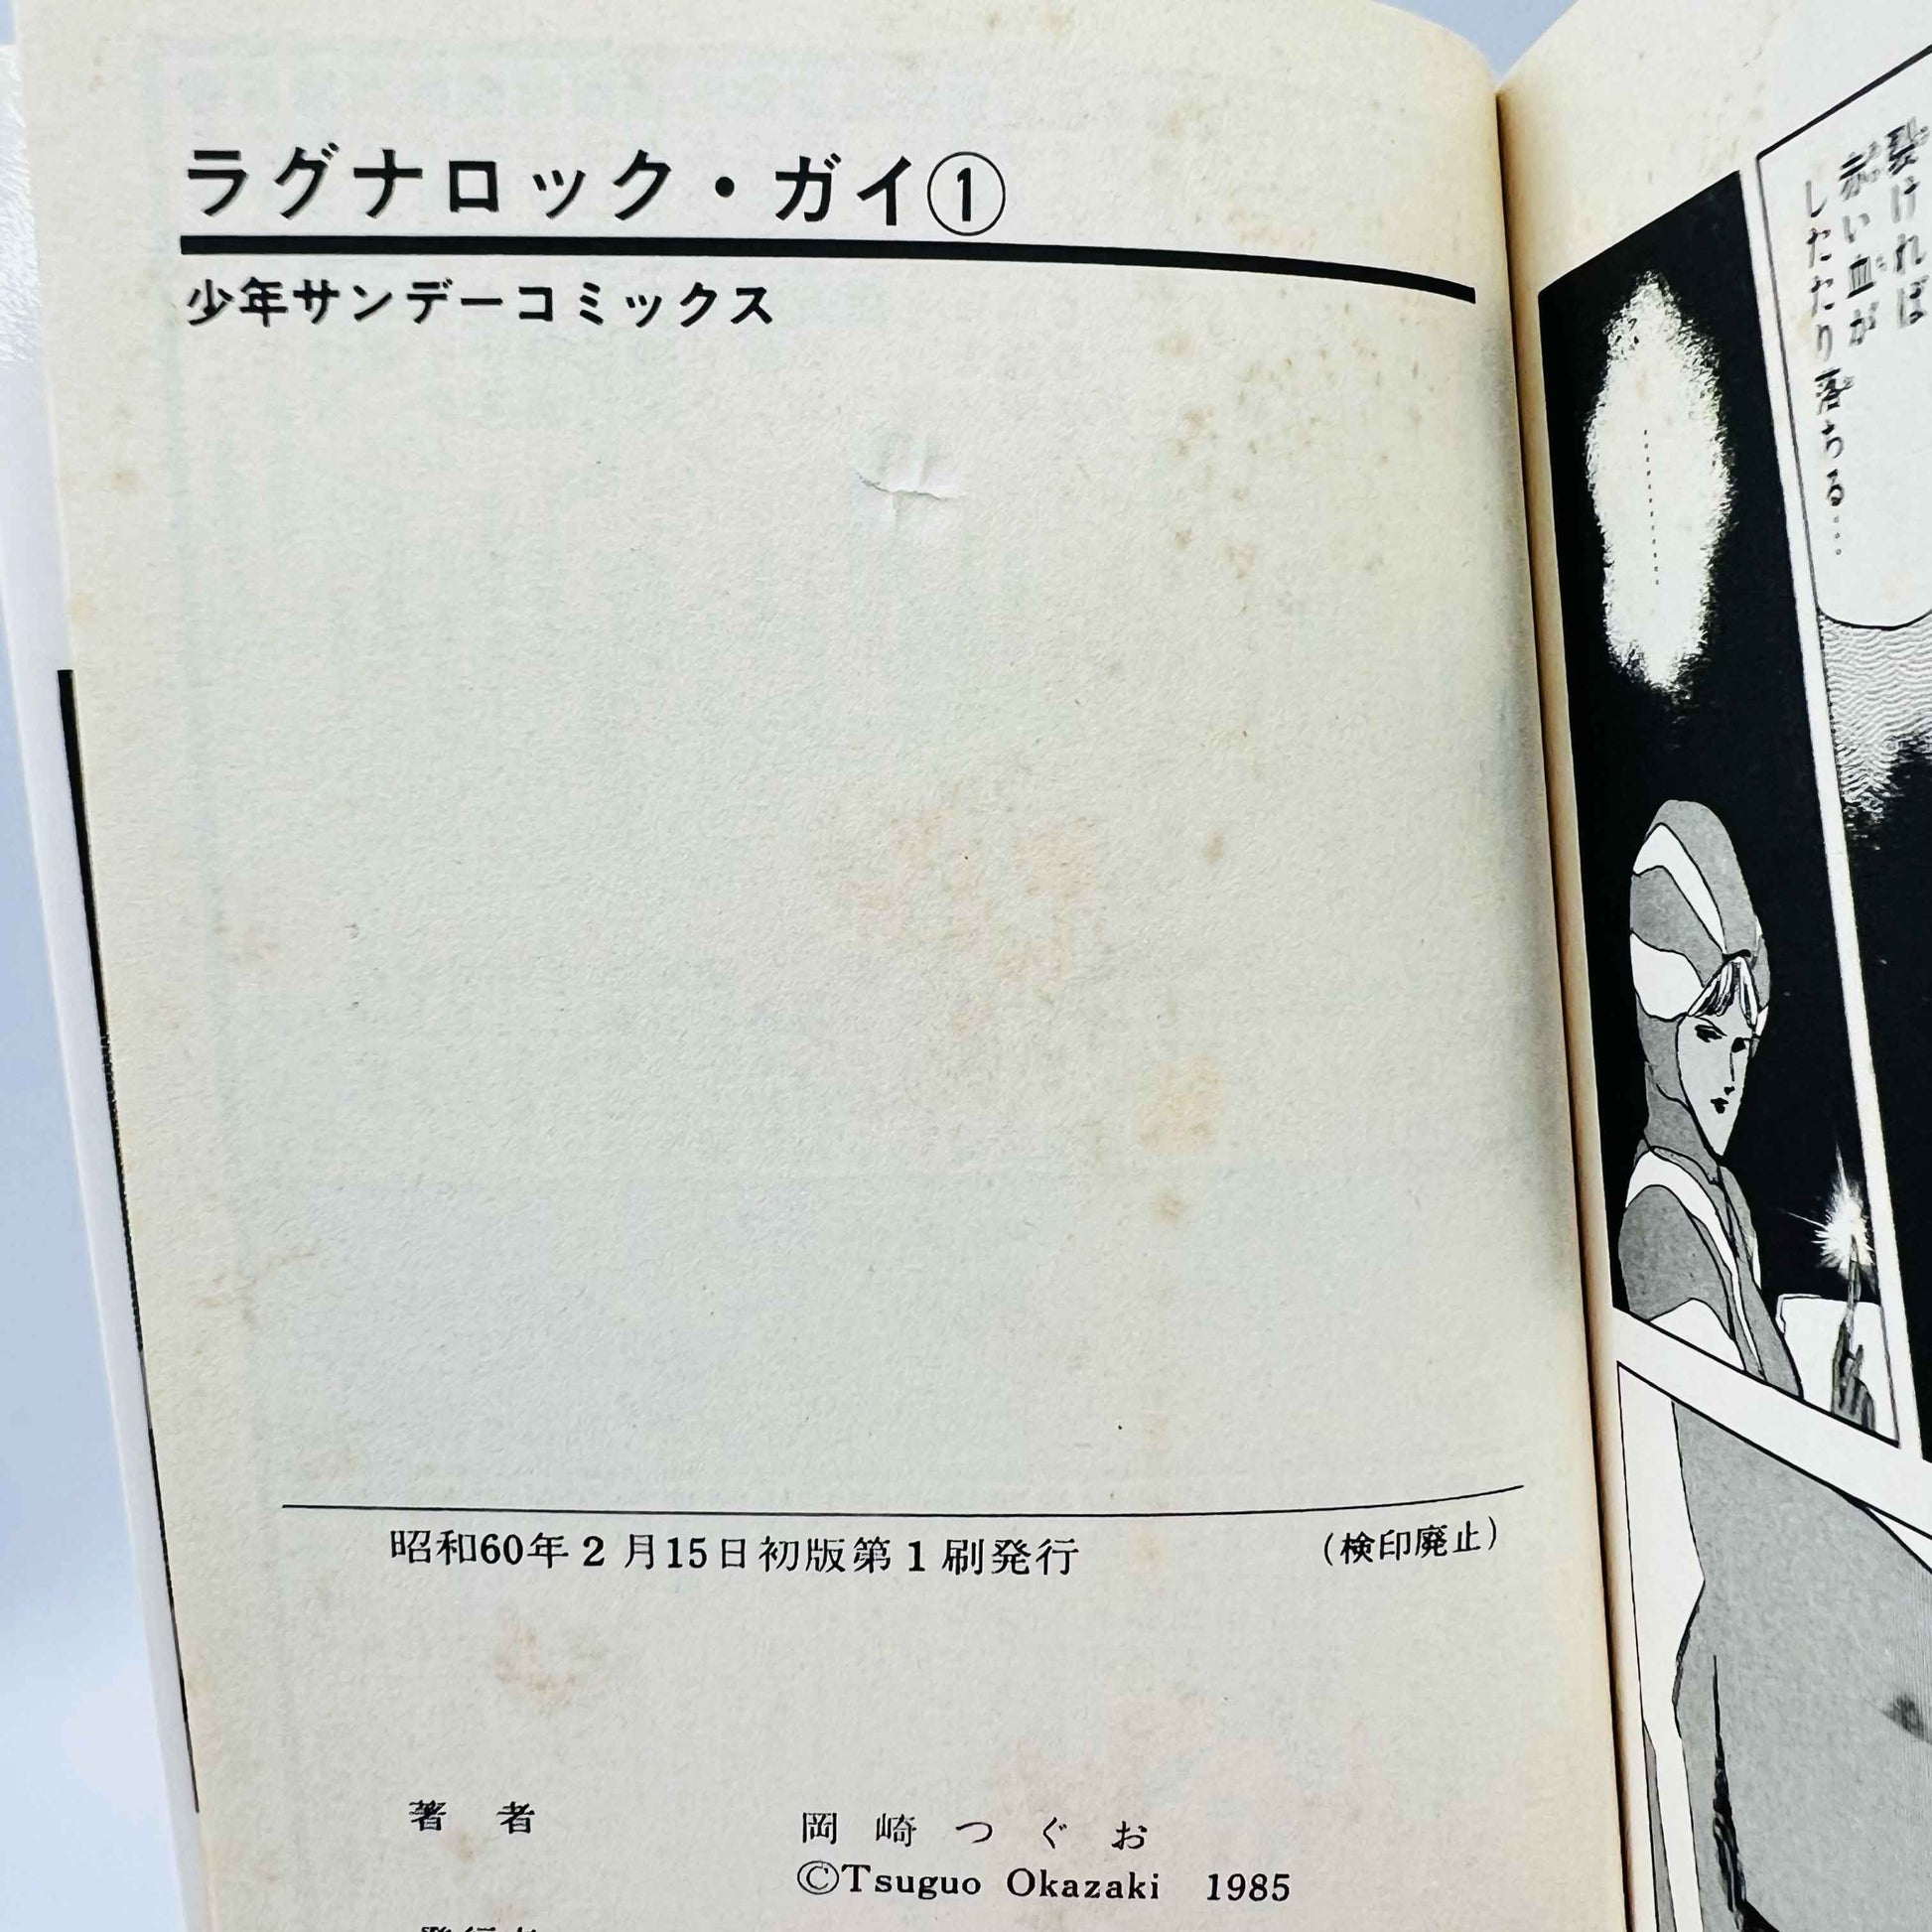 Ragnarok Gai - Volume 01 - 1stPrint.net - 1st First Print Edition Manga Store - M-RAGNAGAI-01-001